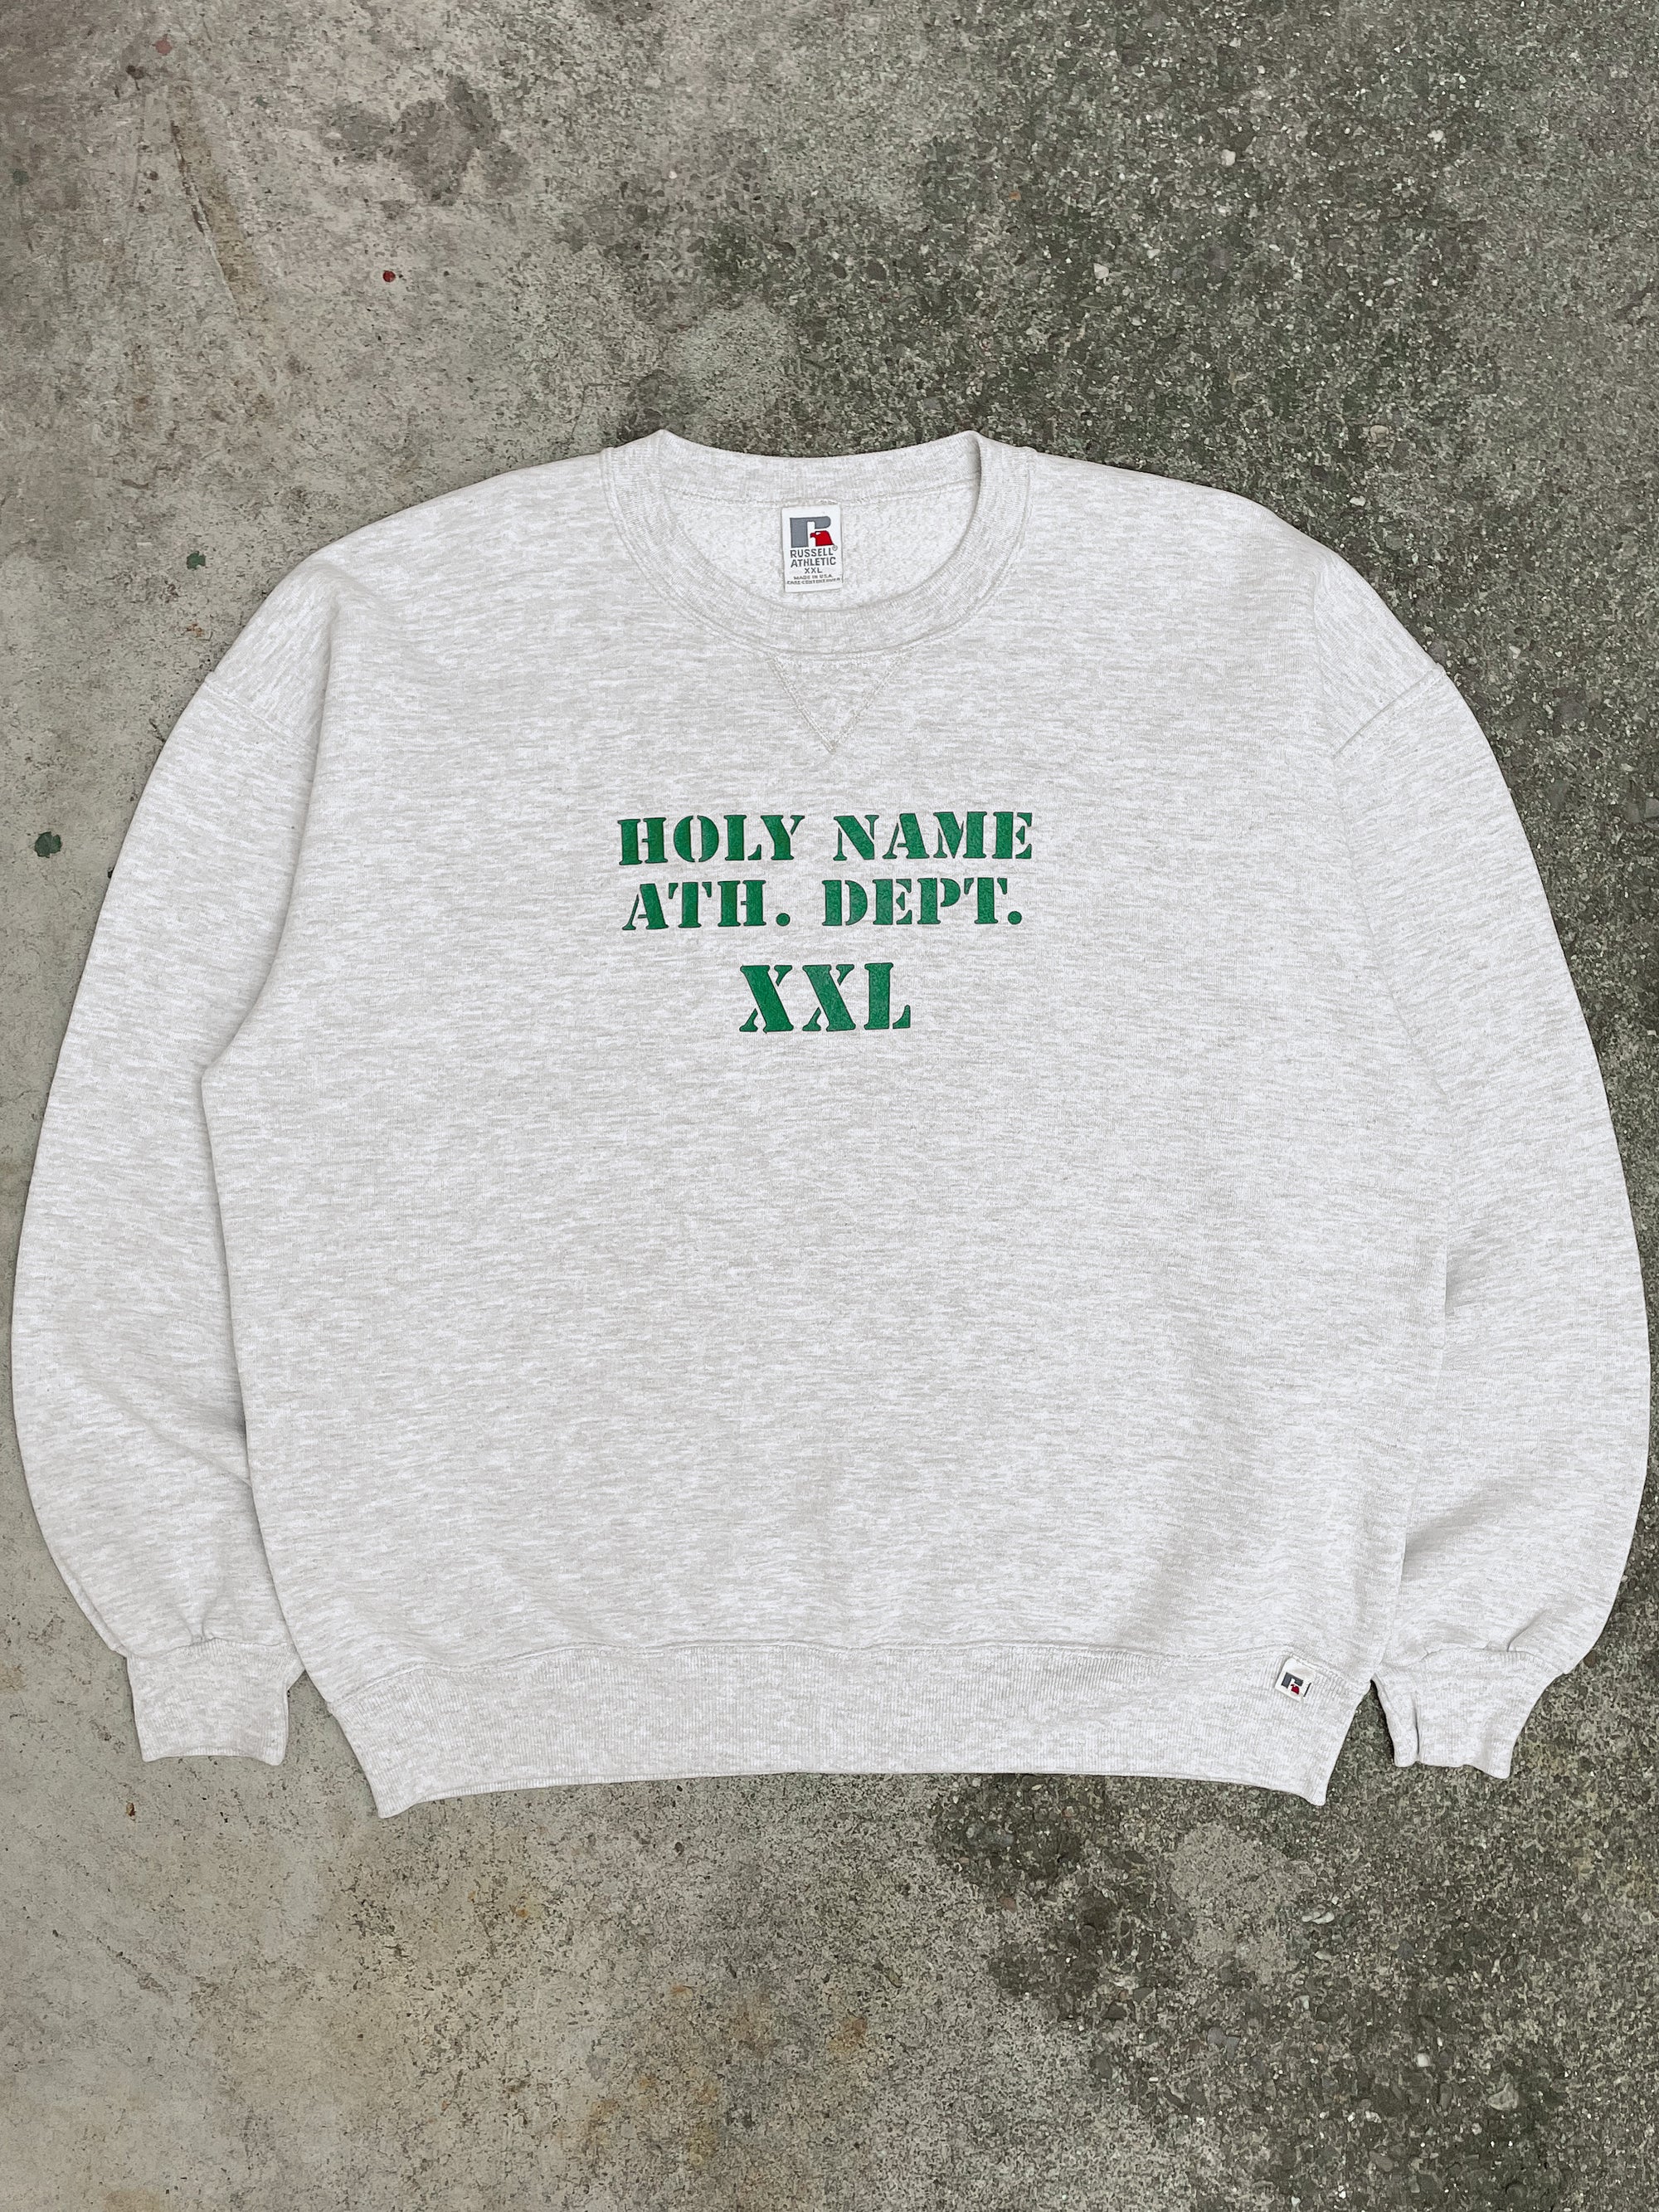 1990s Russell “Holy Name” Sweatshirt (XL/XXL)